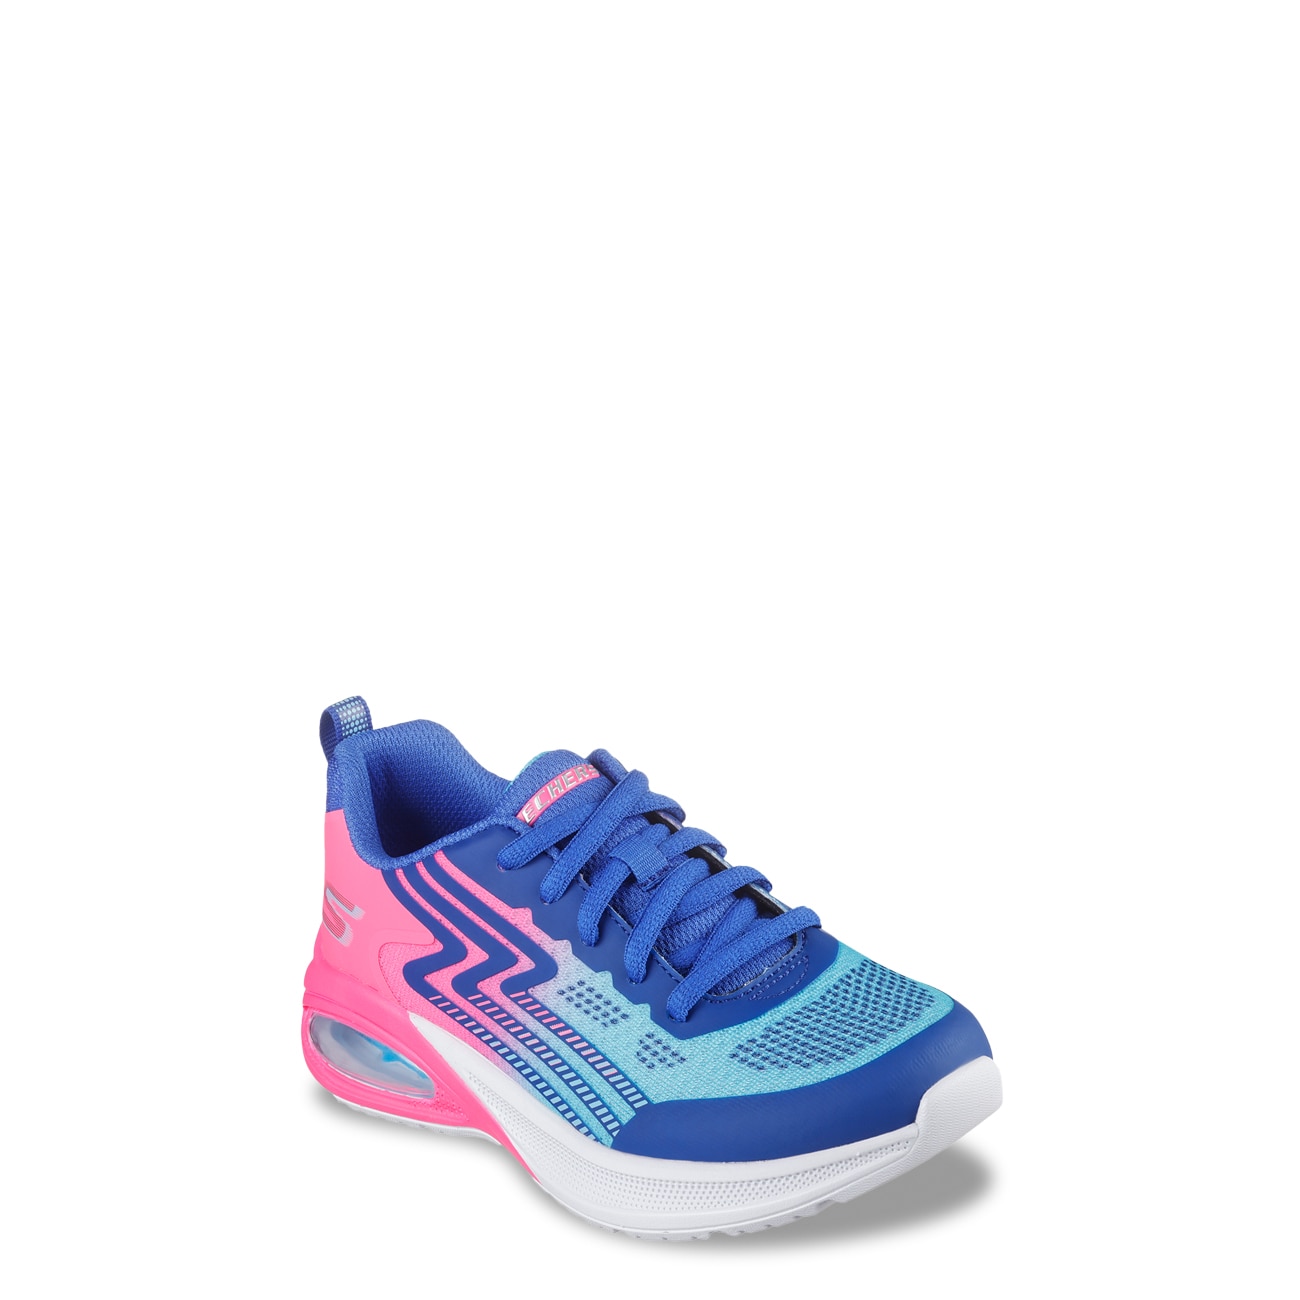 Youth Girls' Microspec Advance Max - Neon Craze Sneaker